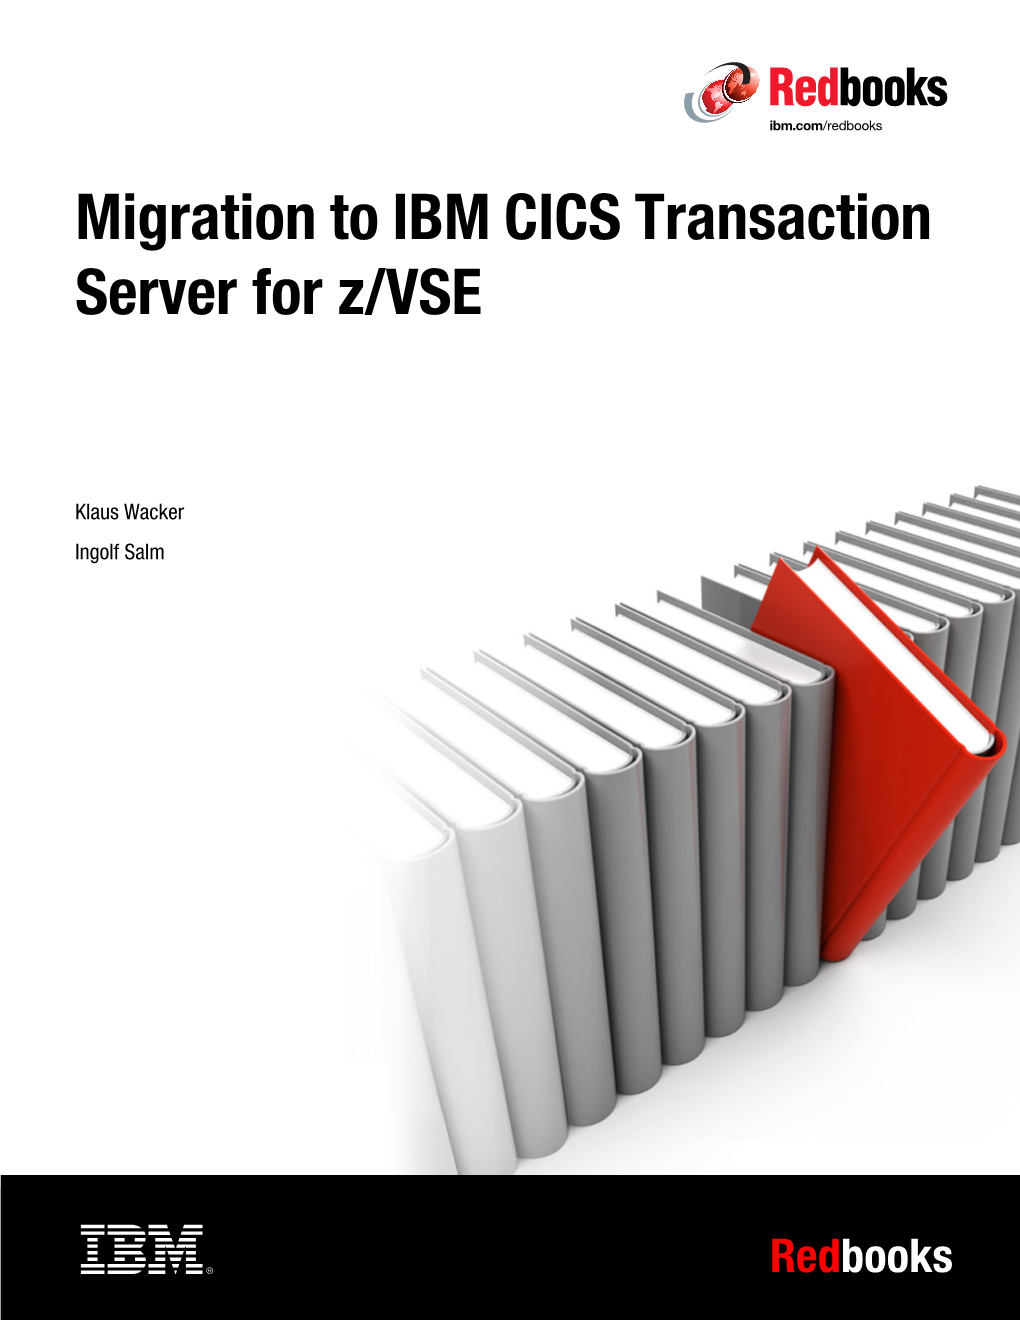 Migration to IBM CICS Transaction Server for Z/VSE